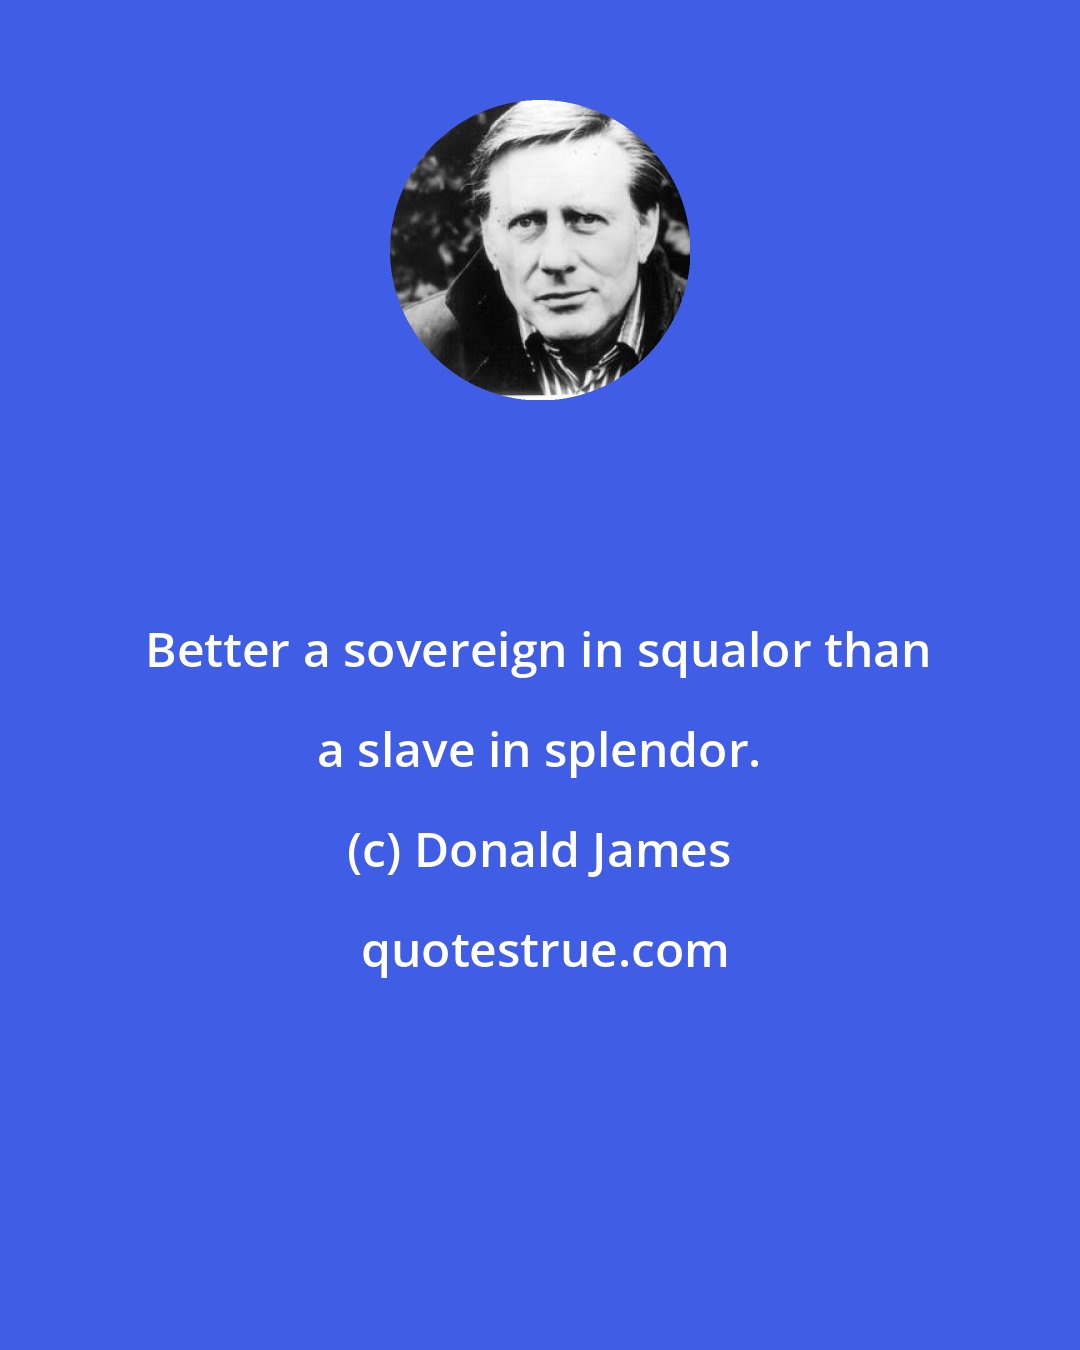 Donald James: Better a sovereign in squalor than a slave in splendor.